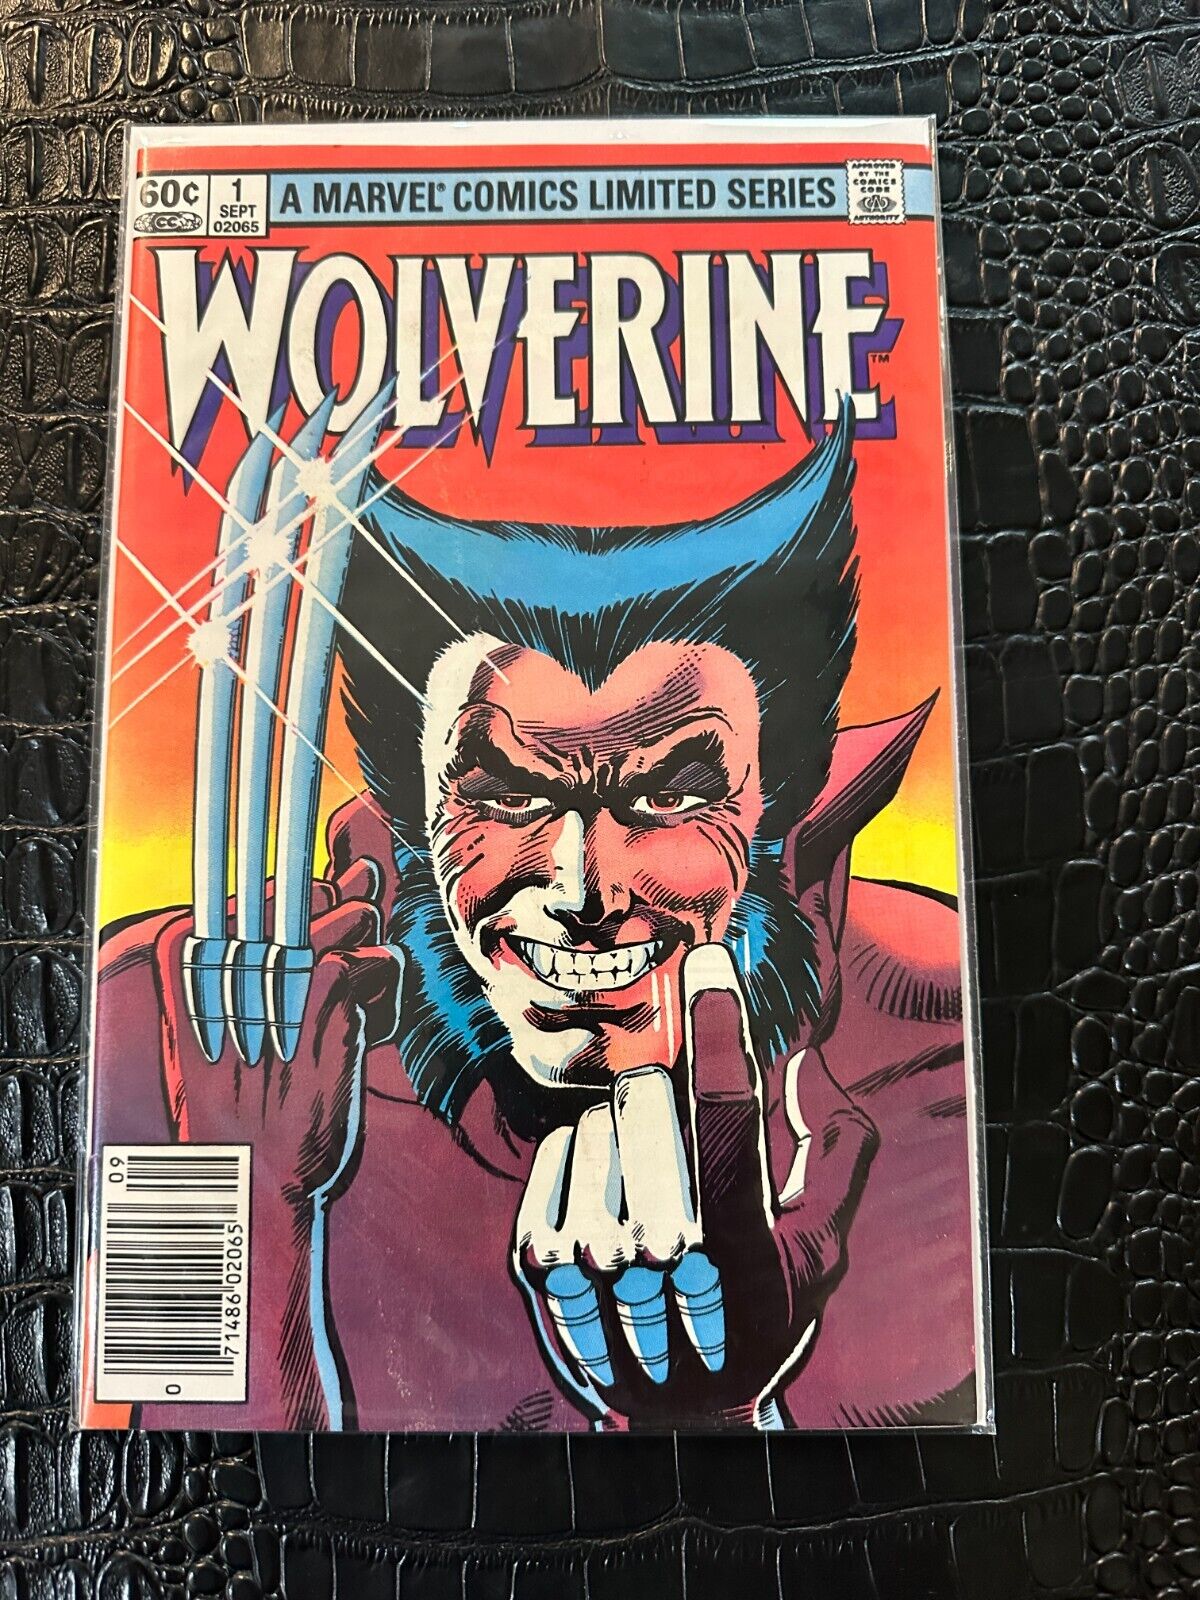 WOLVERINE #1 NM 1982 Marvel Comics Limited Series